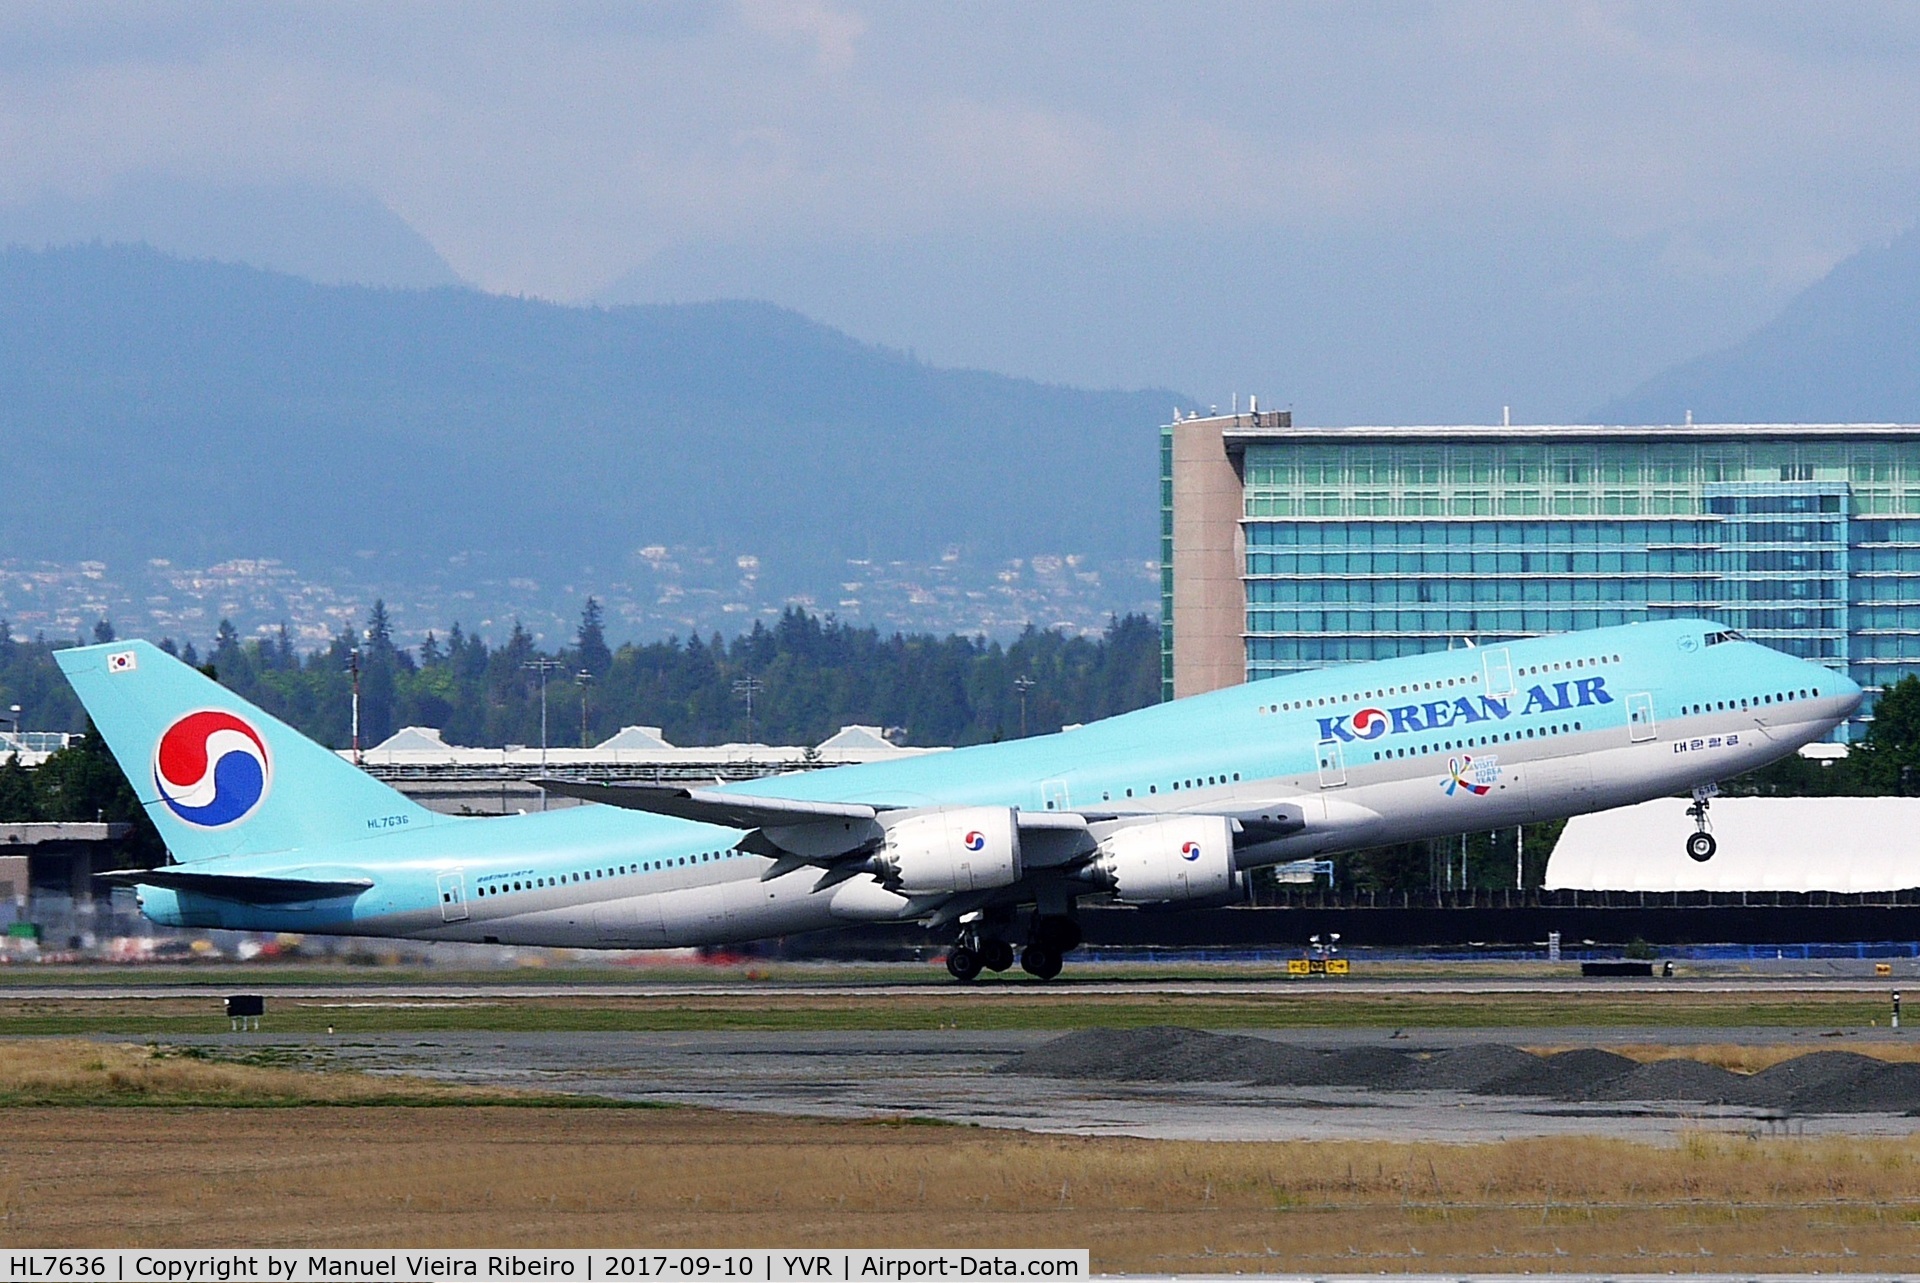 HL7636, 2015 Boeing 747-8B5 C/N 60407, Departure from Vancouver